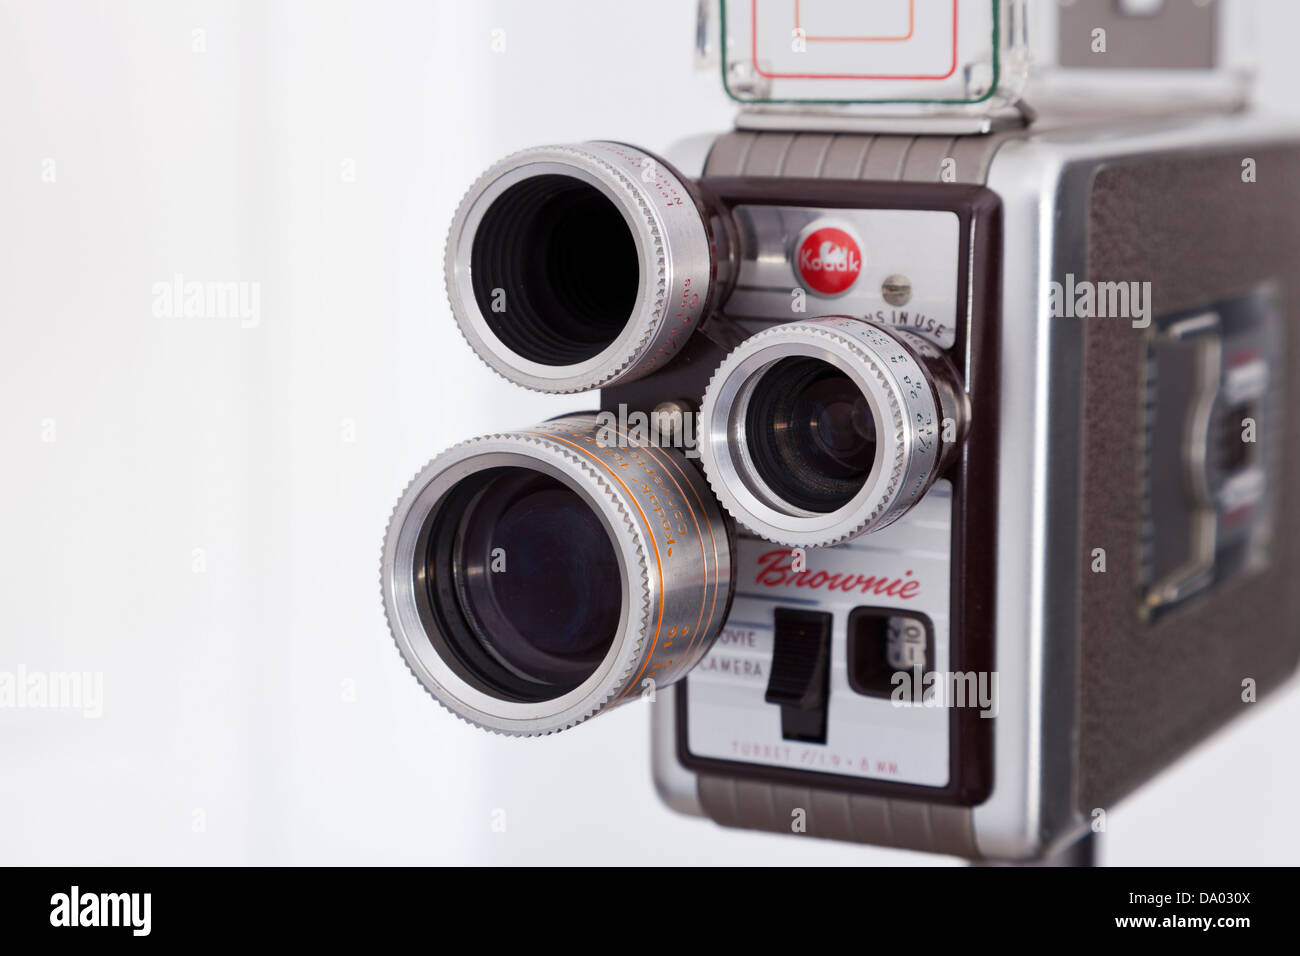 8mm camera -Fotos und -Bildmaterial in hoher Auflösung – Alamy